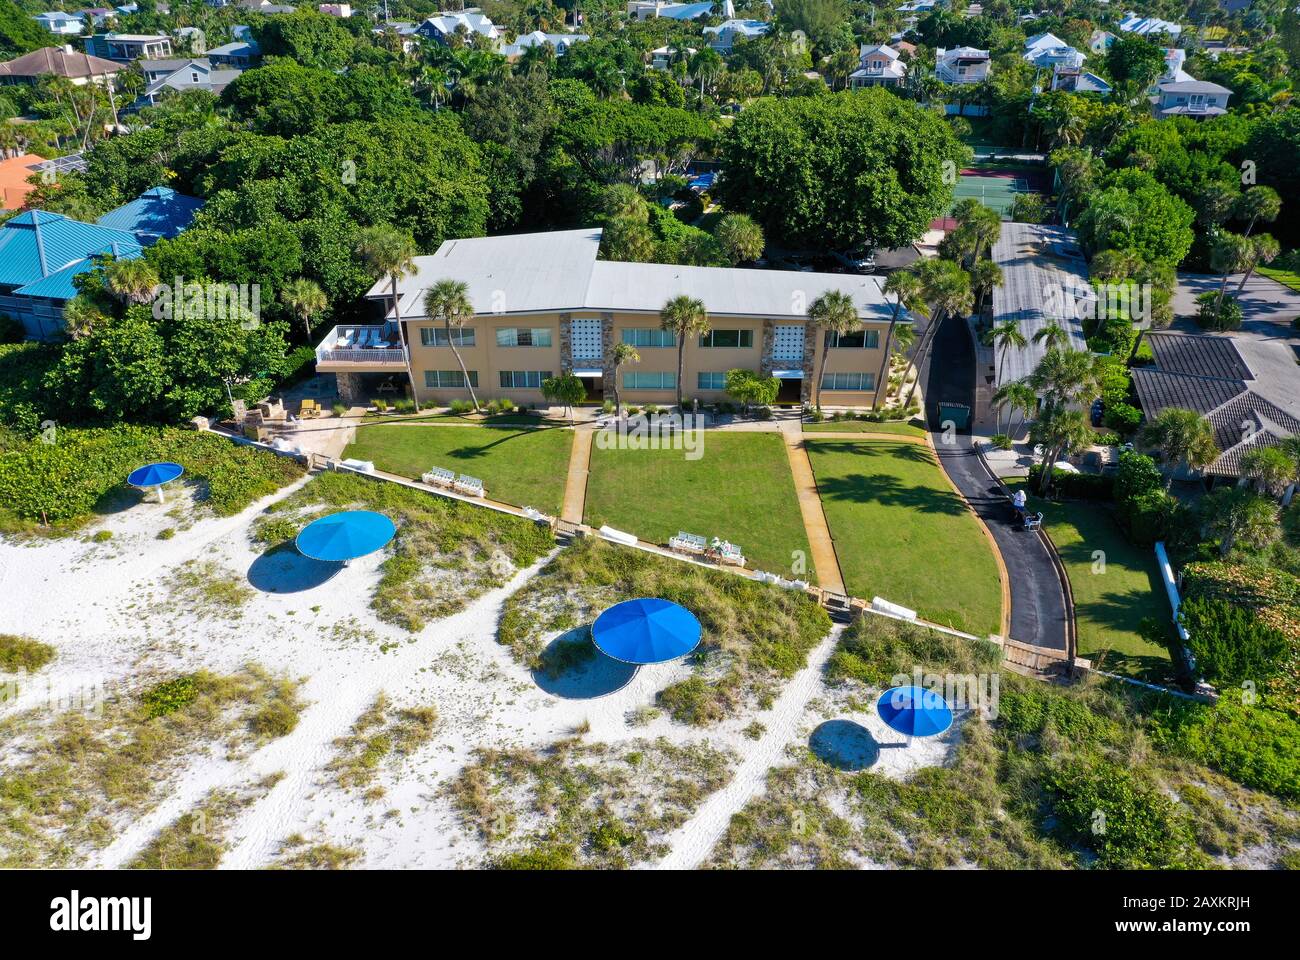 Anna MARIA ISLAND, FL / USA - 23 settembre 2019: LayBy Resort on Holmes Beach Fl. È una proprietà balneare venduta a Garth Brooks e Moglie Trisha Foto Stock